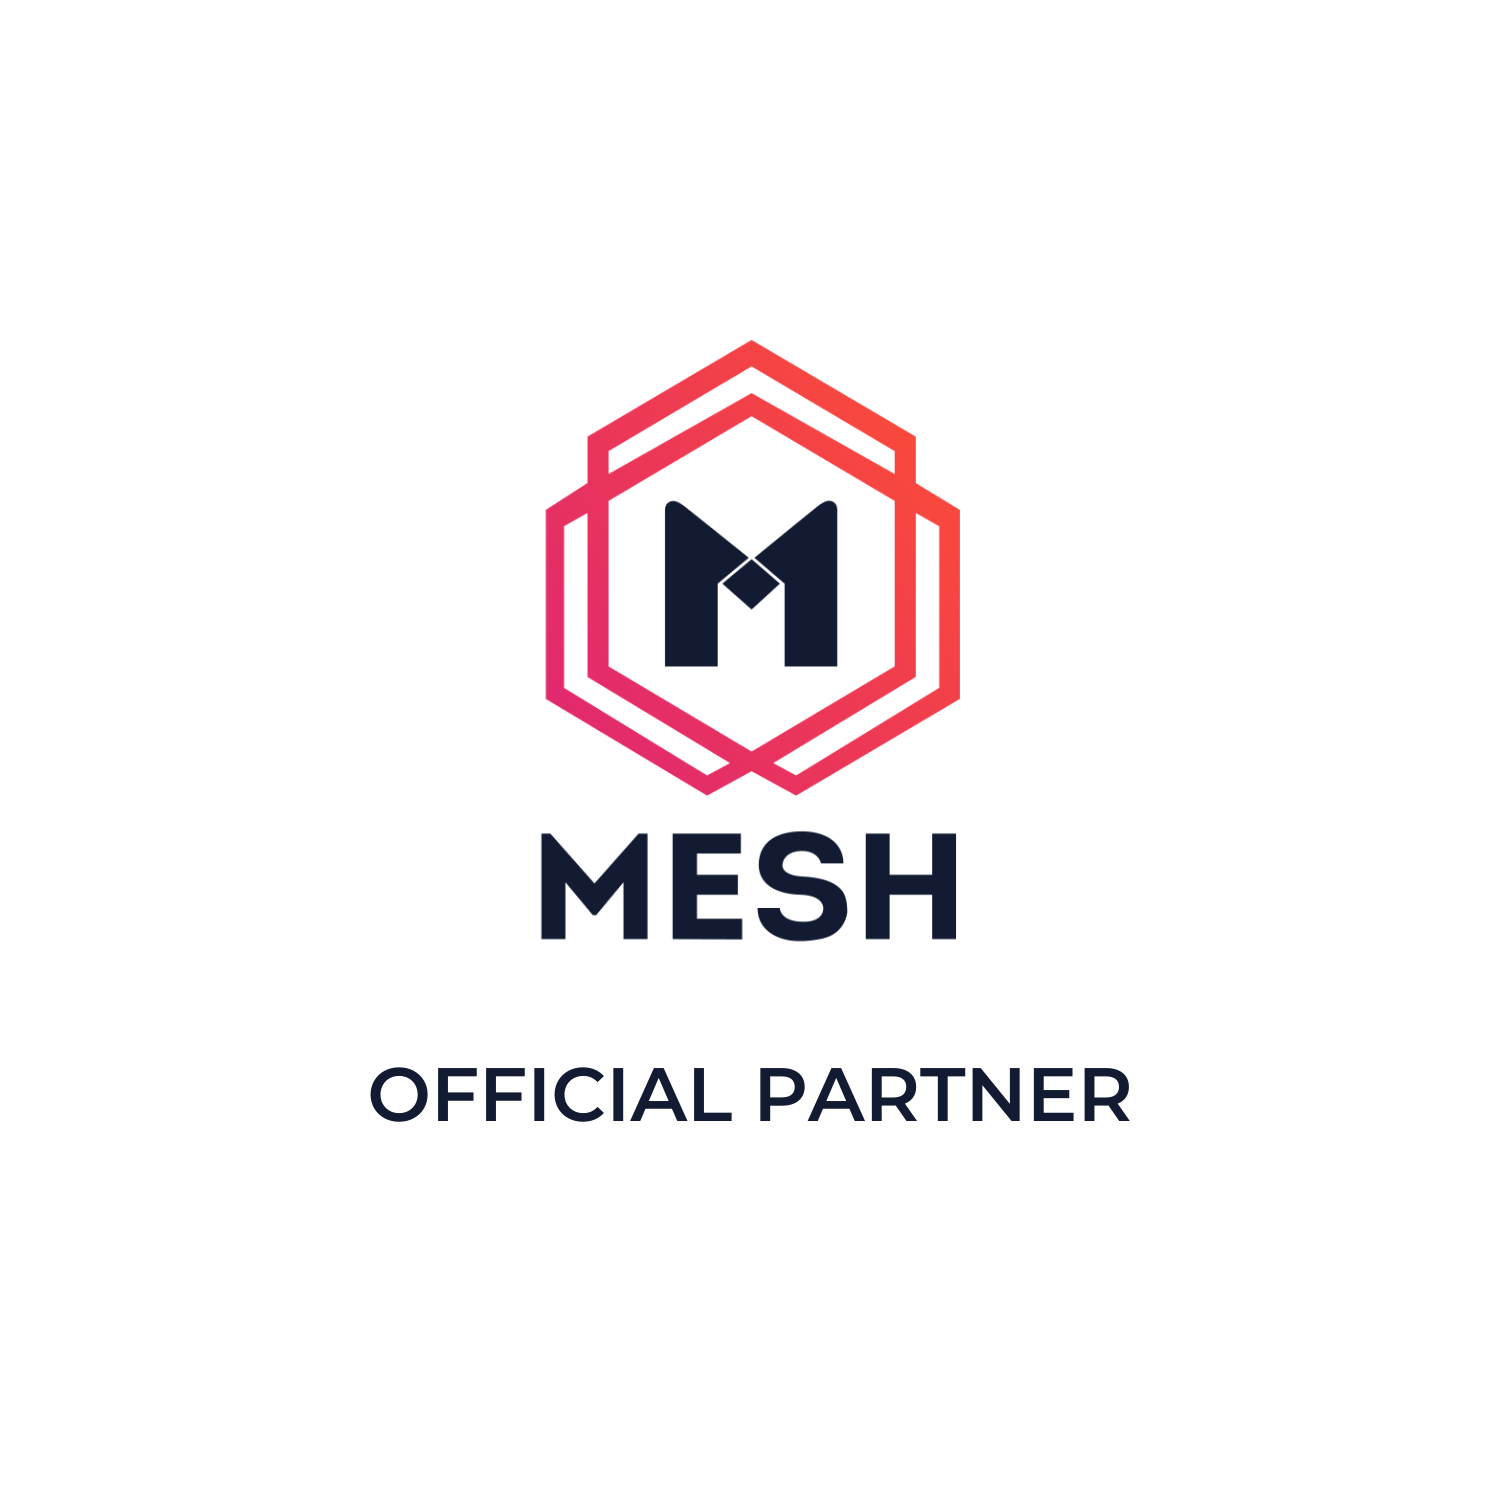 MESH Official Partner